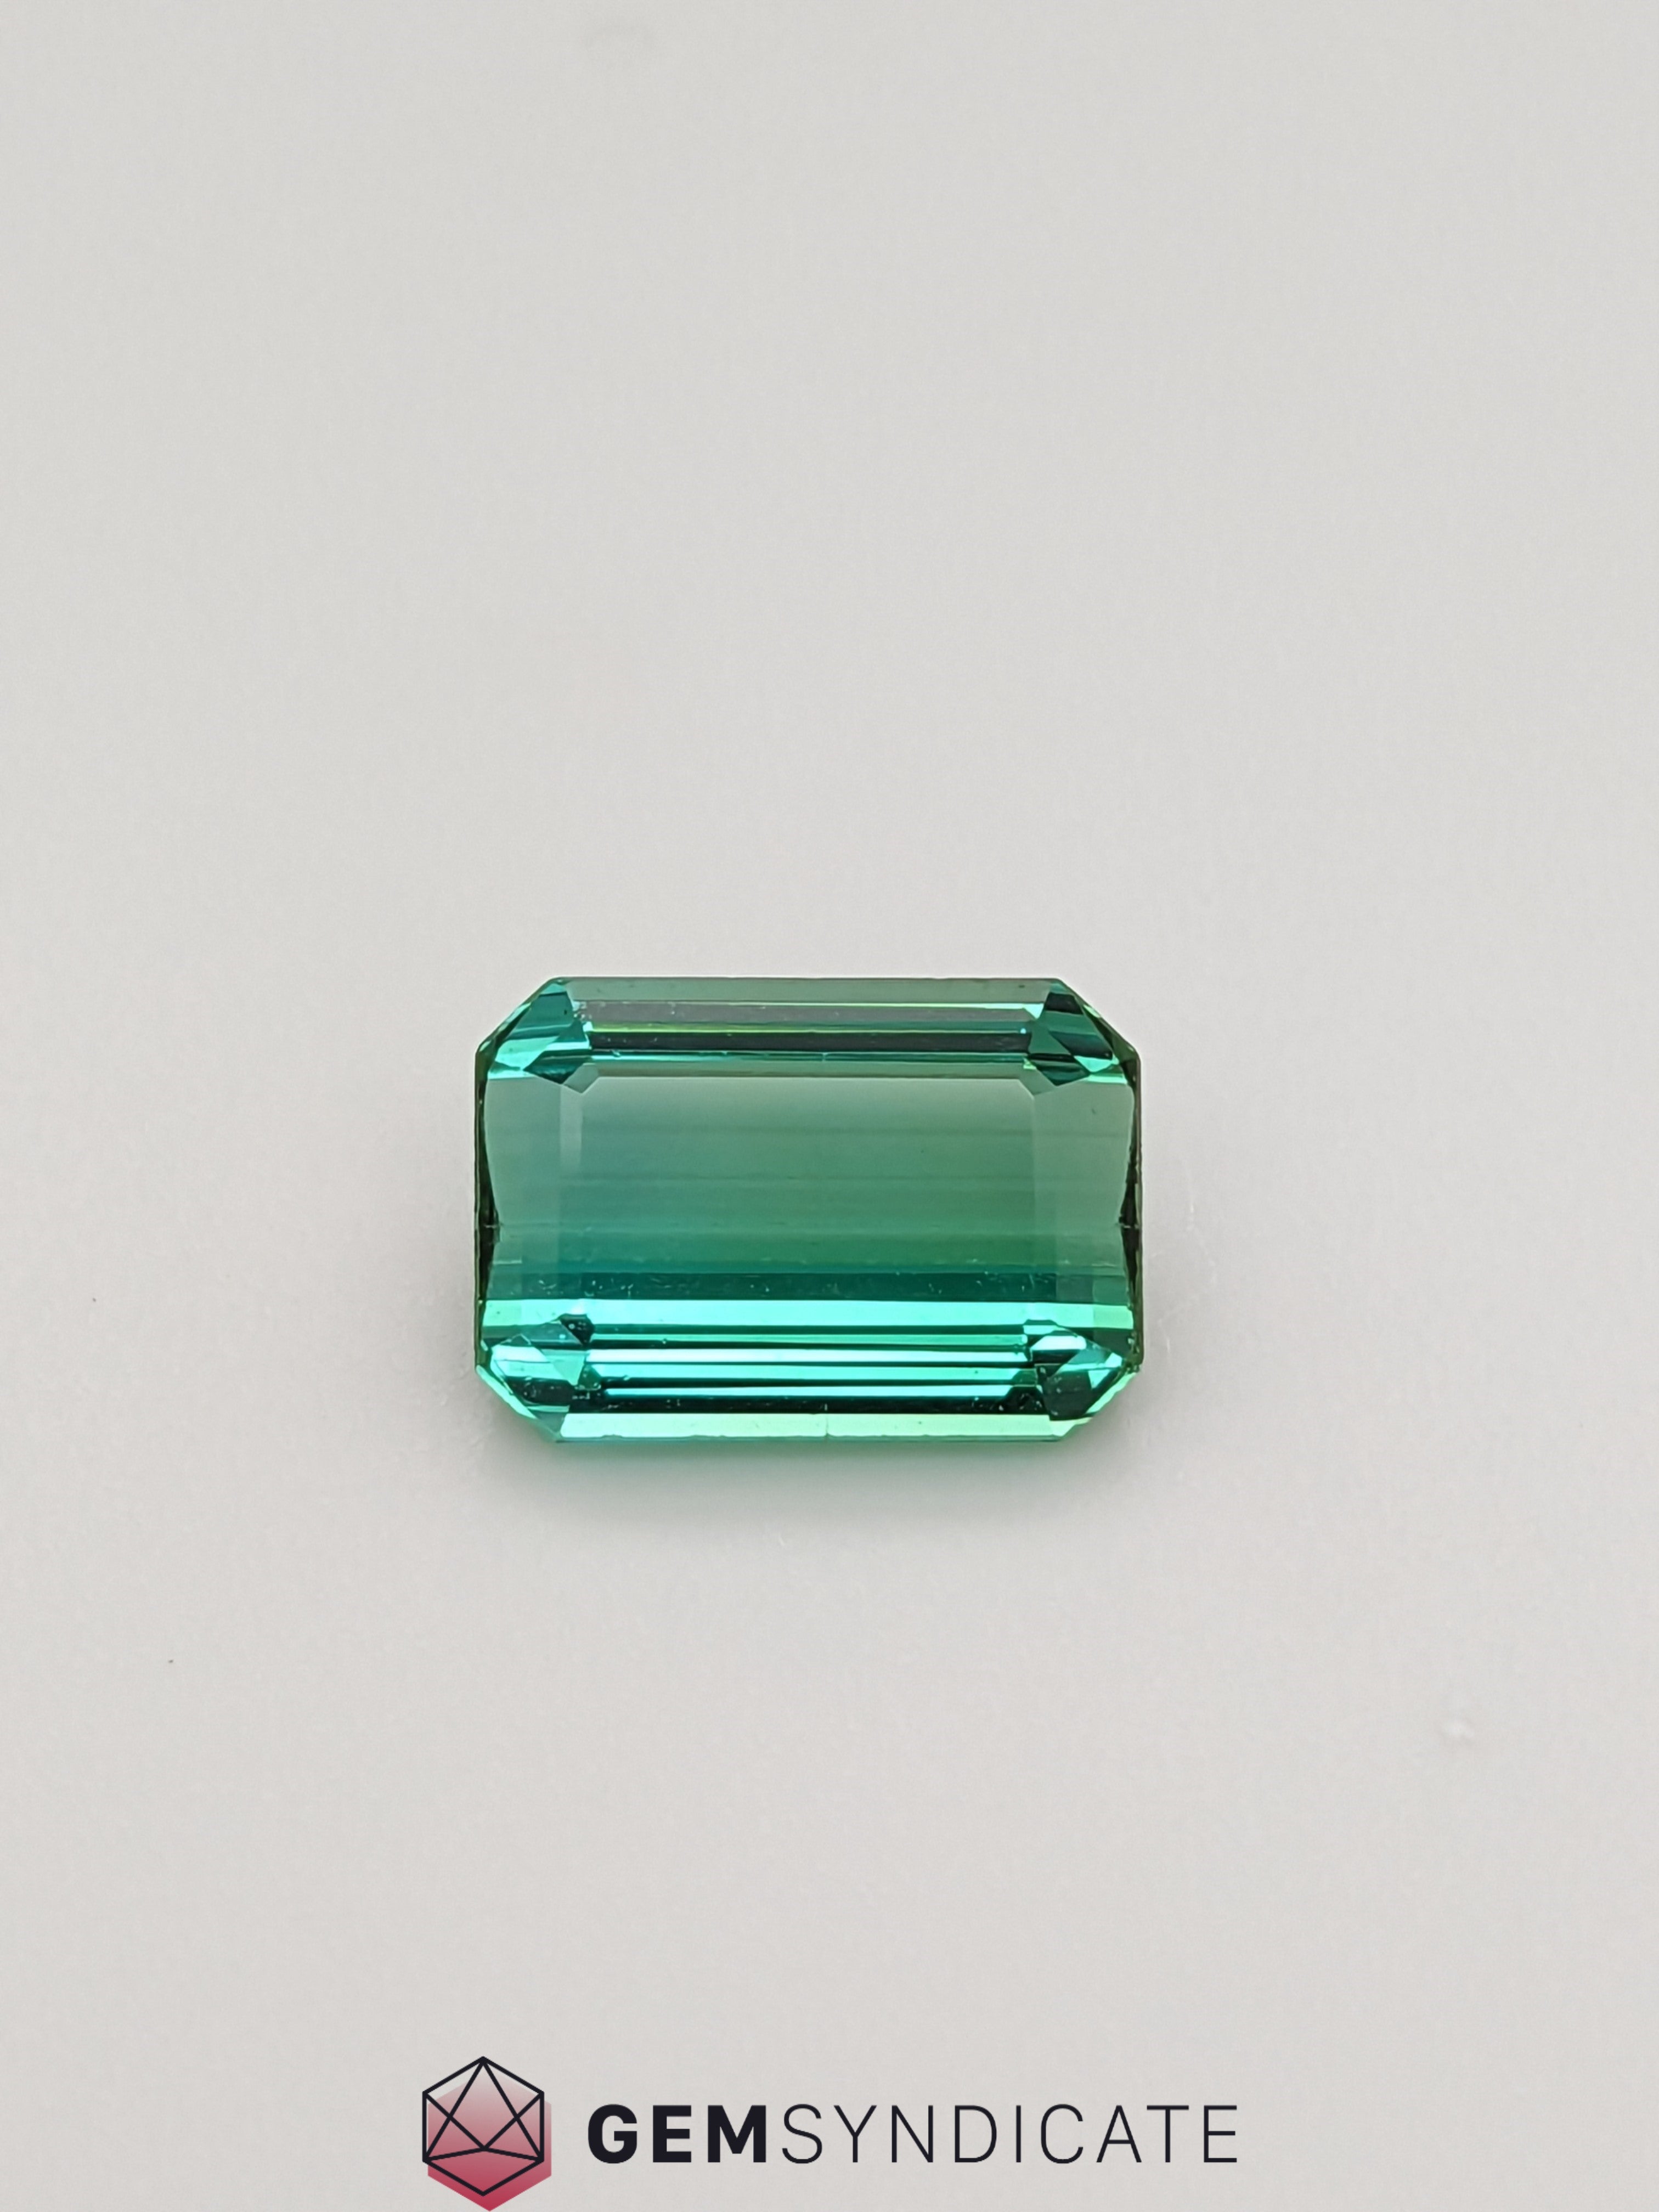 Vivacious Emerald Cut Green Tourmaline 5.33ct